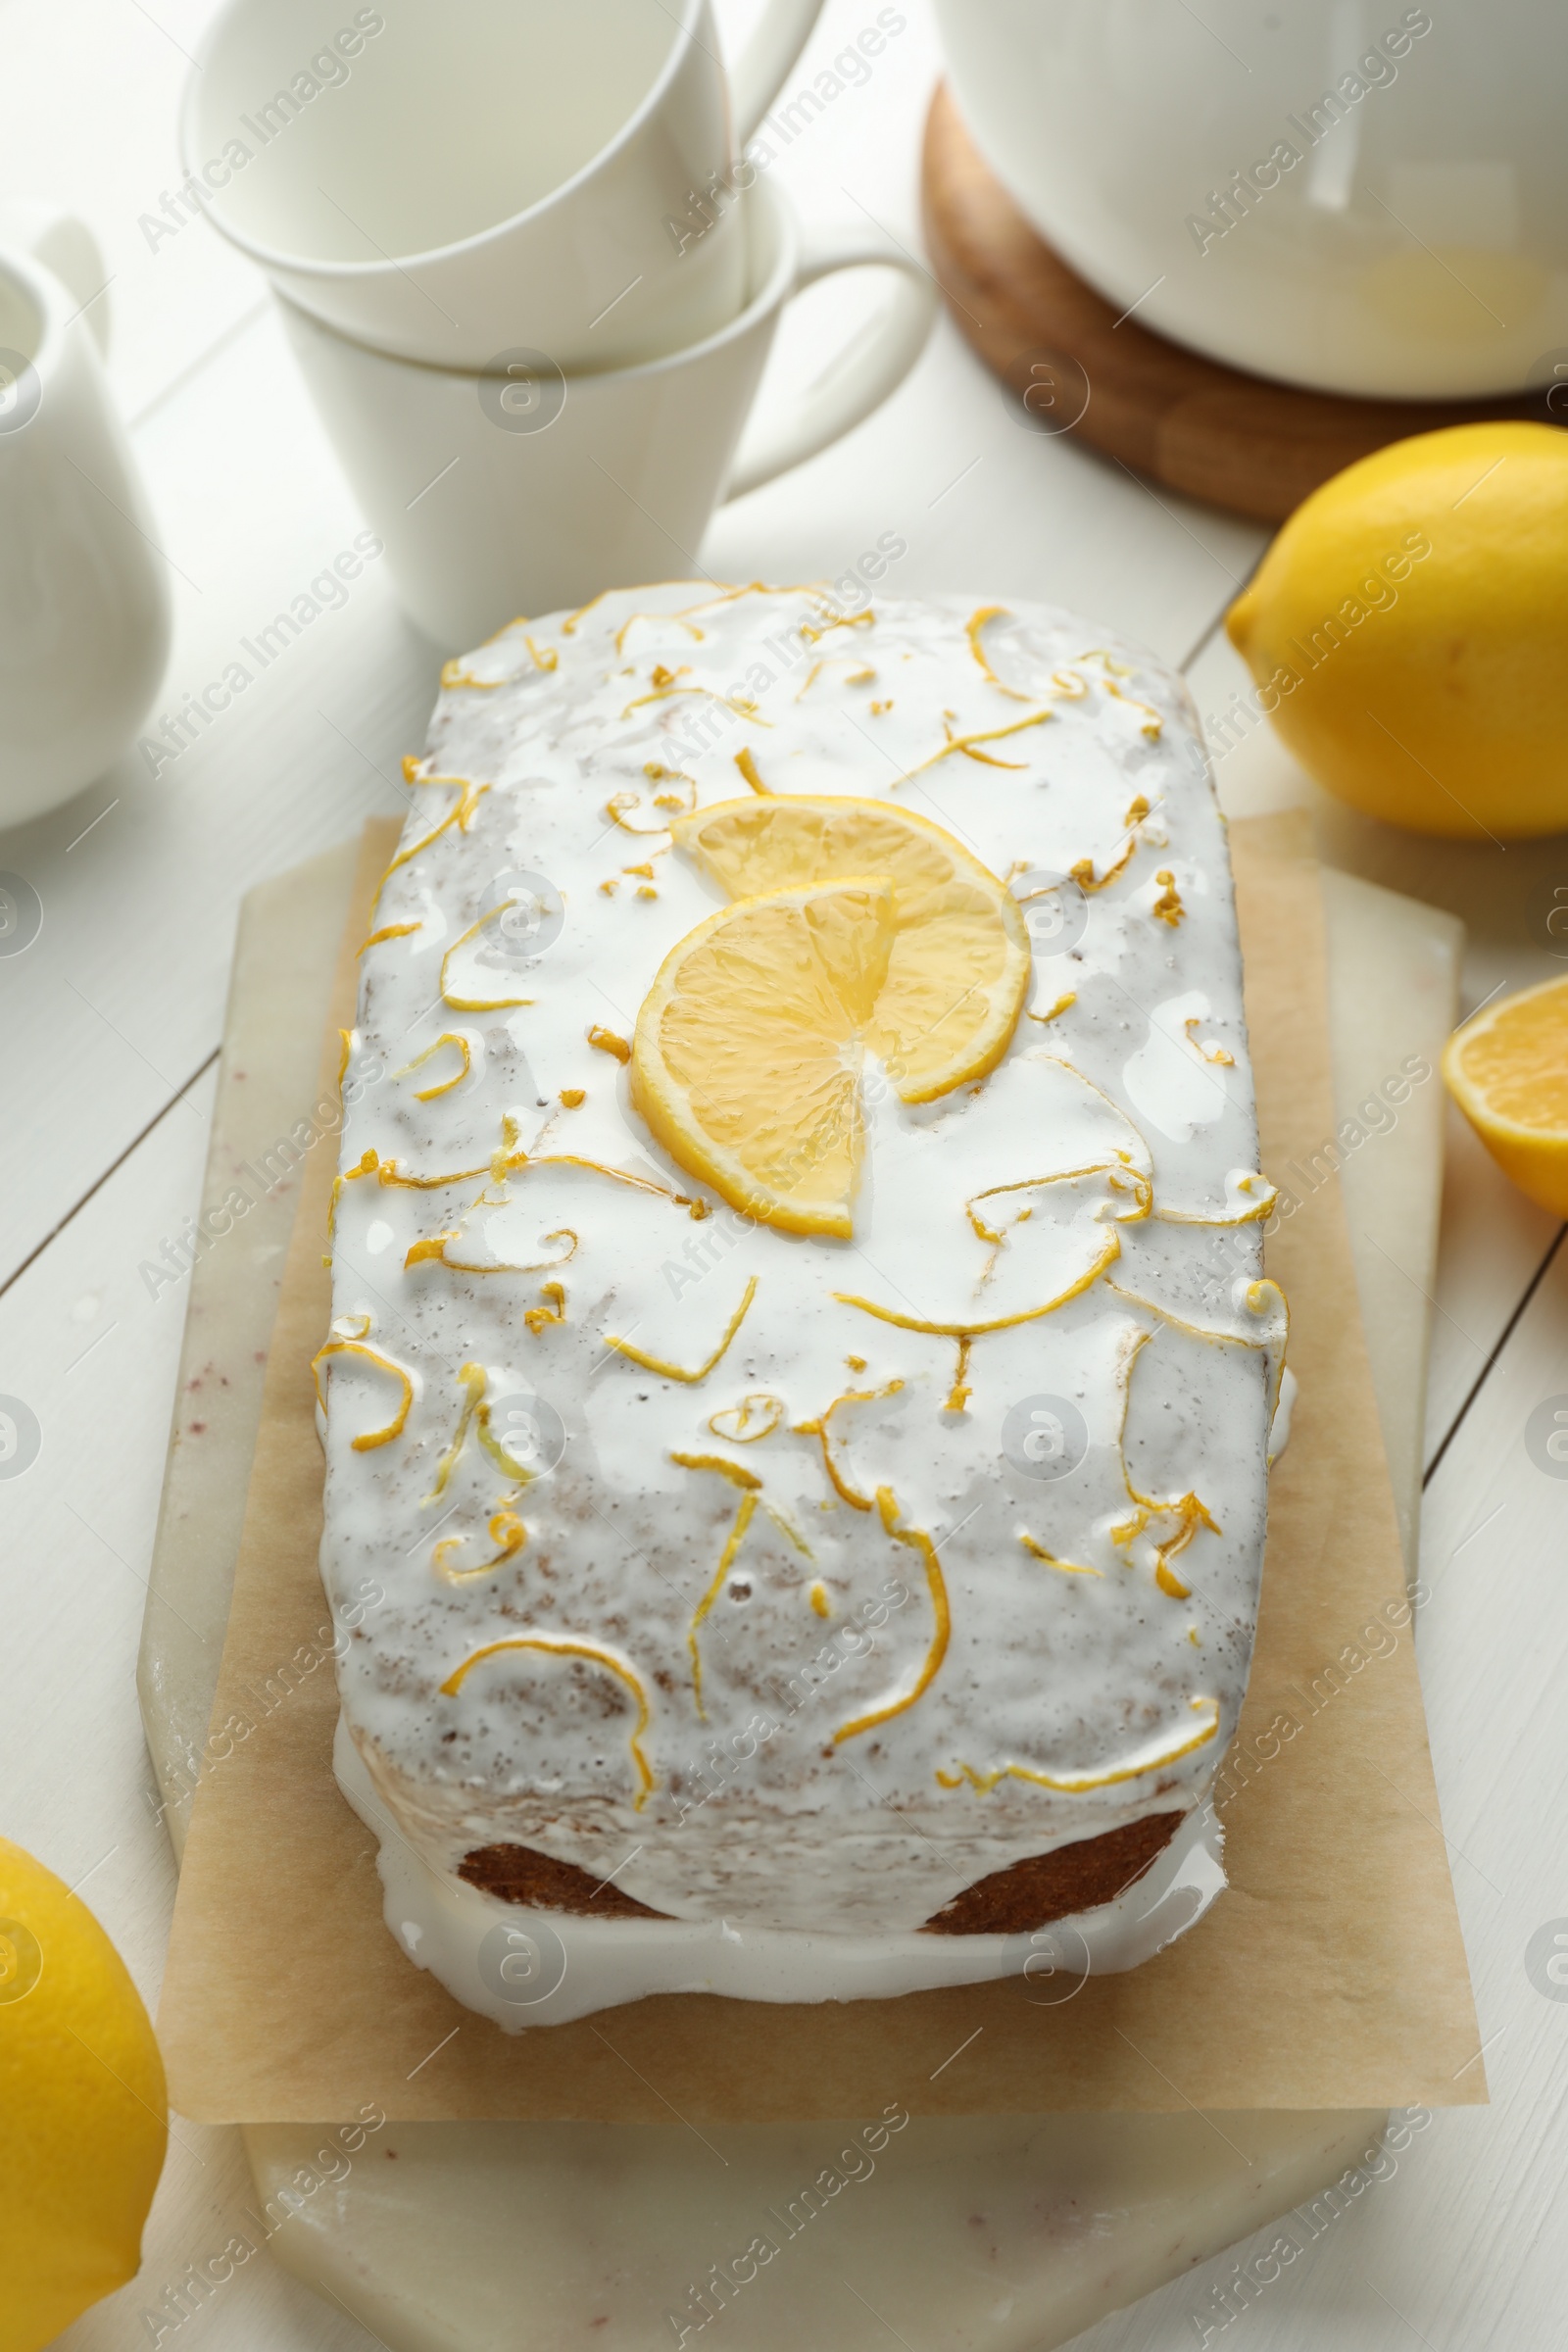 Photo of Tasty lemon cake with glaze and citrus fruits on white table, closeup